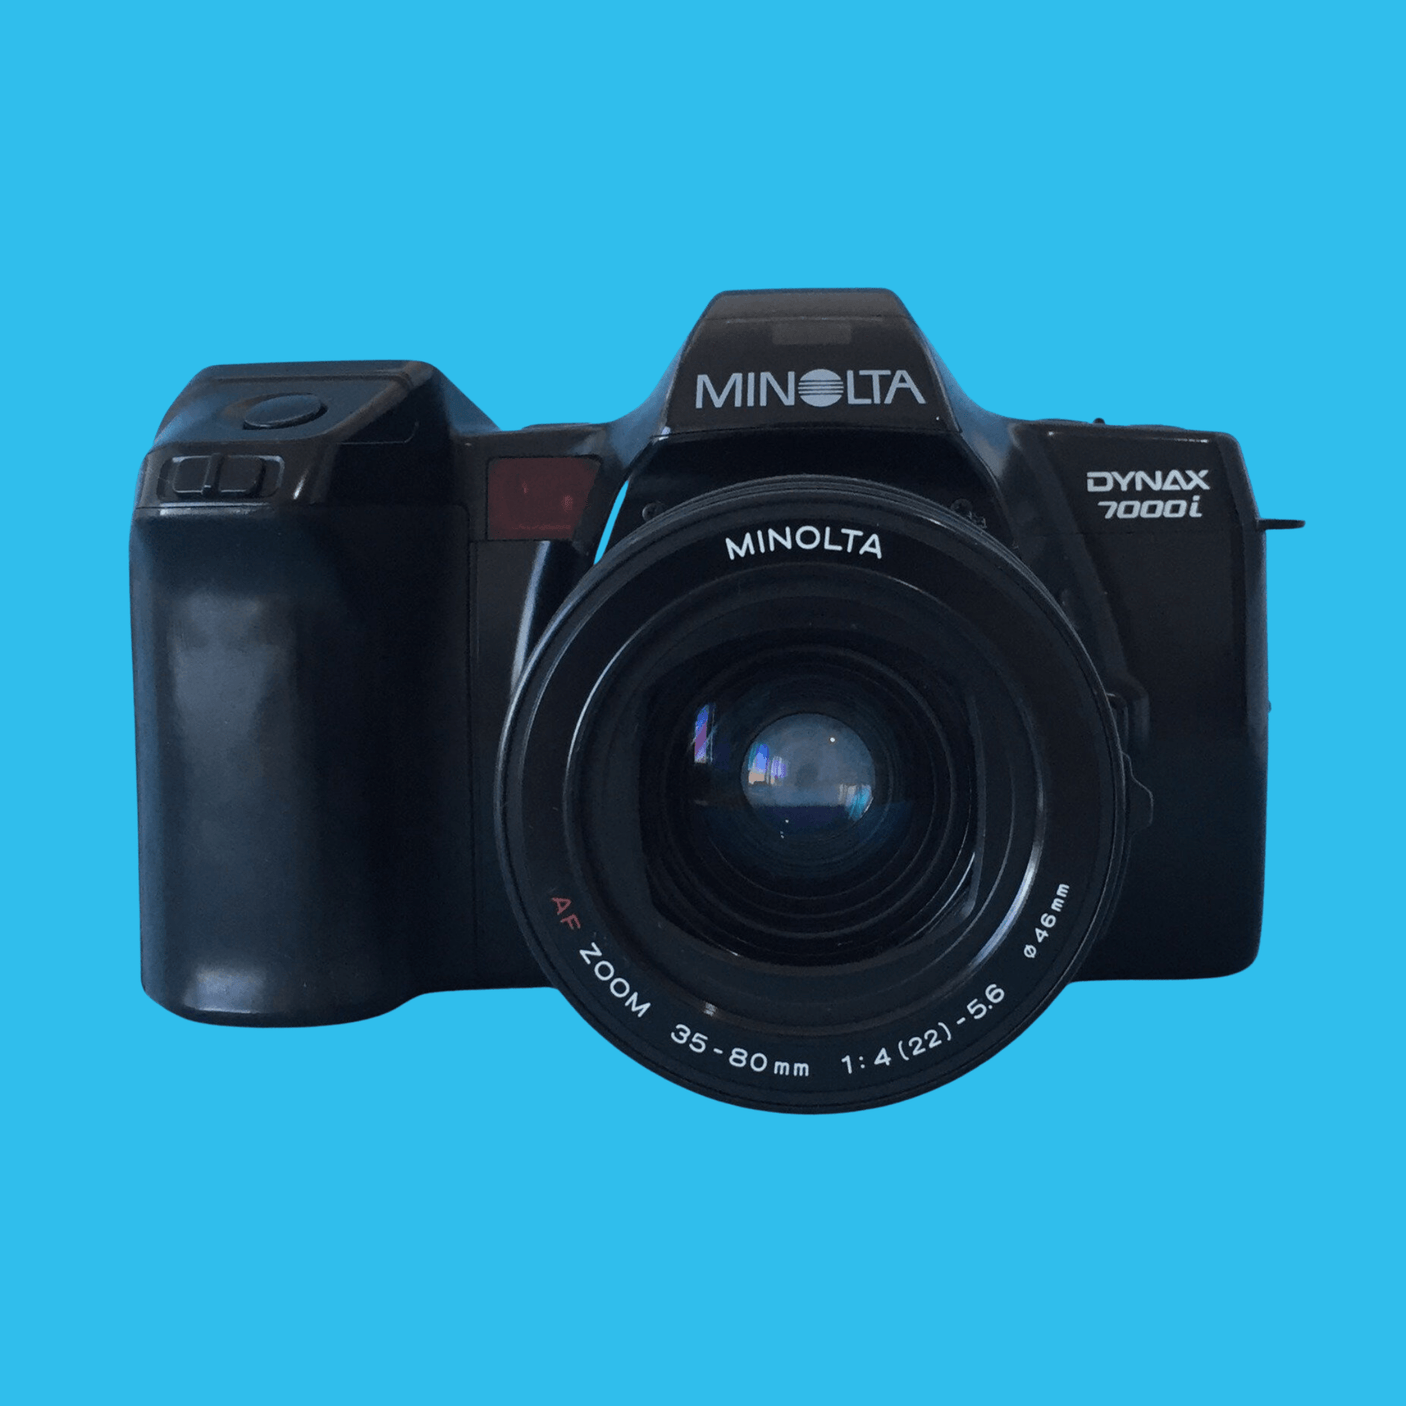 Minolta Maxxum 7000i Automatic SLR 35mm Film Camera with Minolta AF 35mm-105mm Zoom Lens